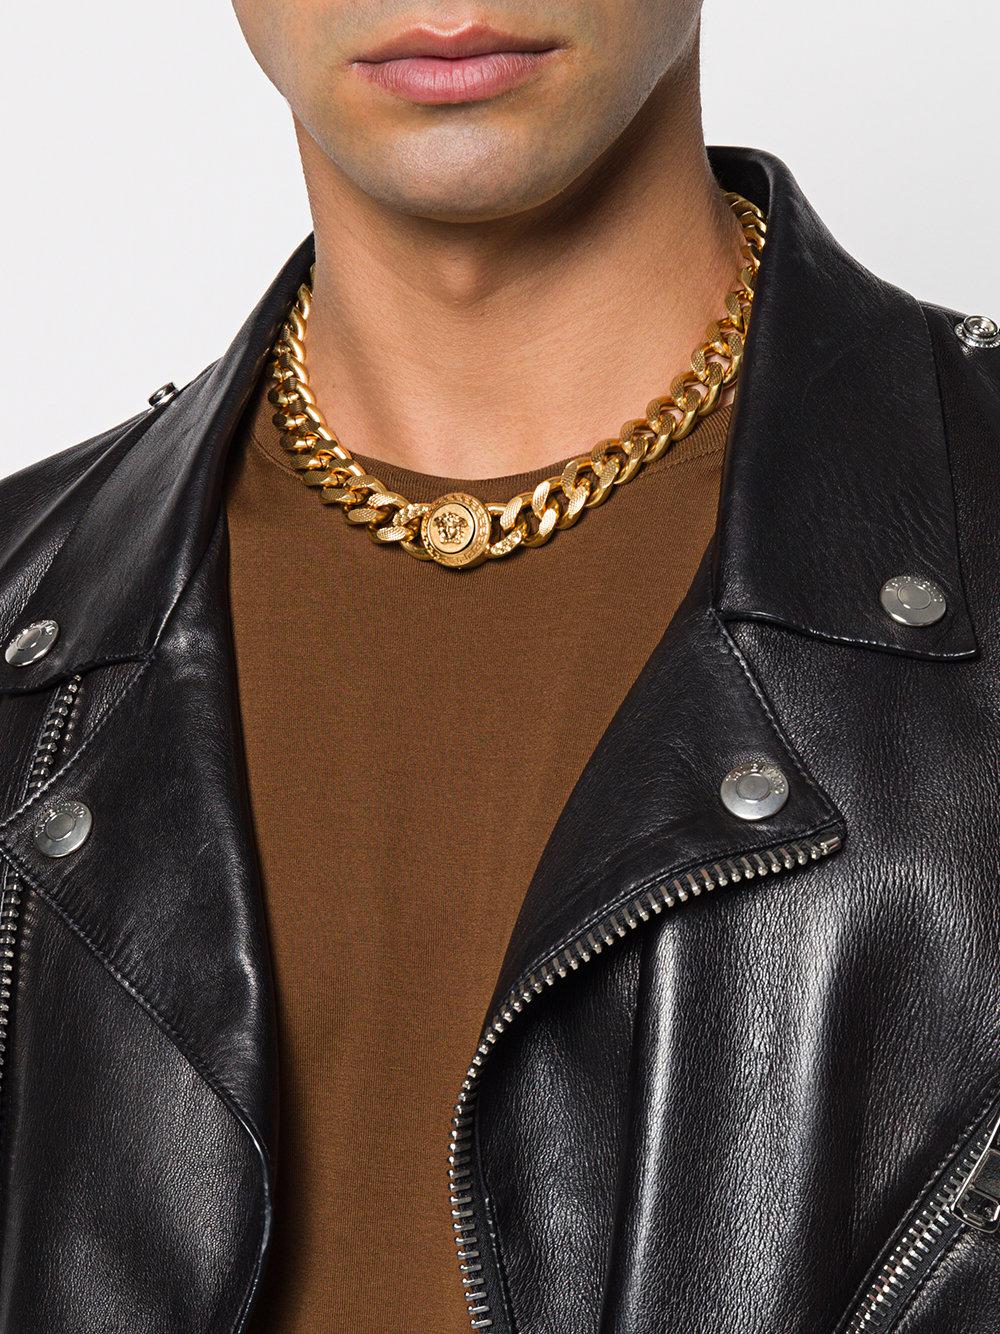 Versace Medusa Chainlink Necklace in Metallic for Men - Lyst